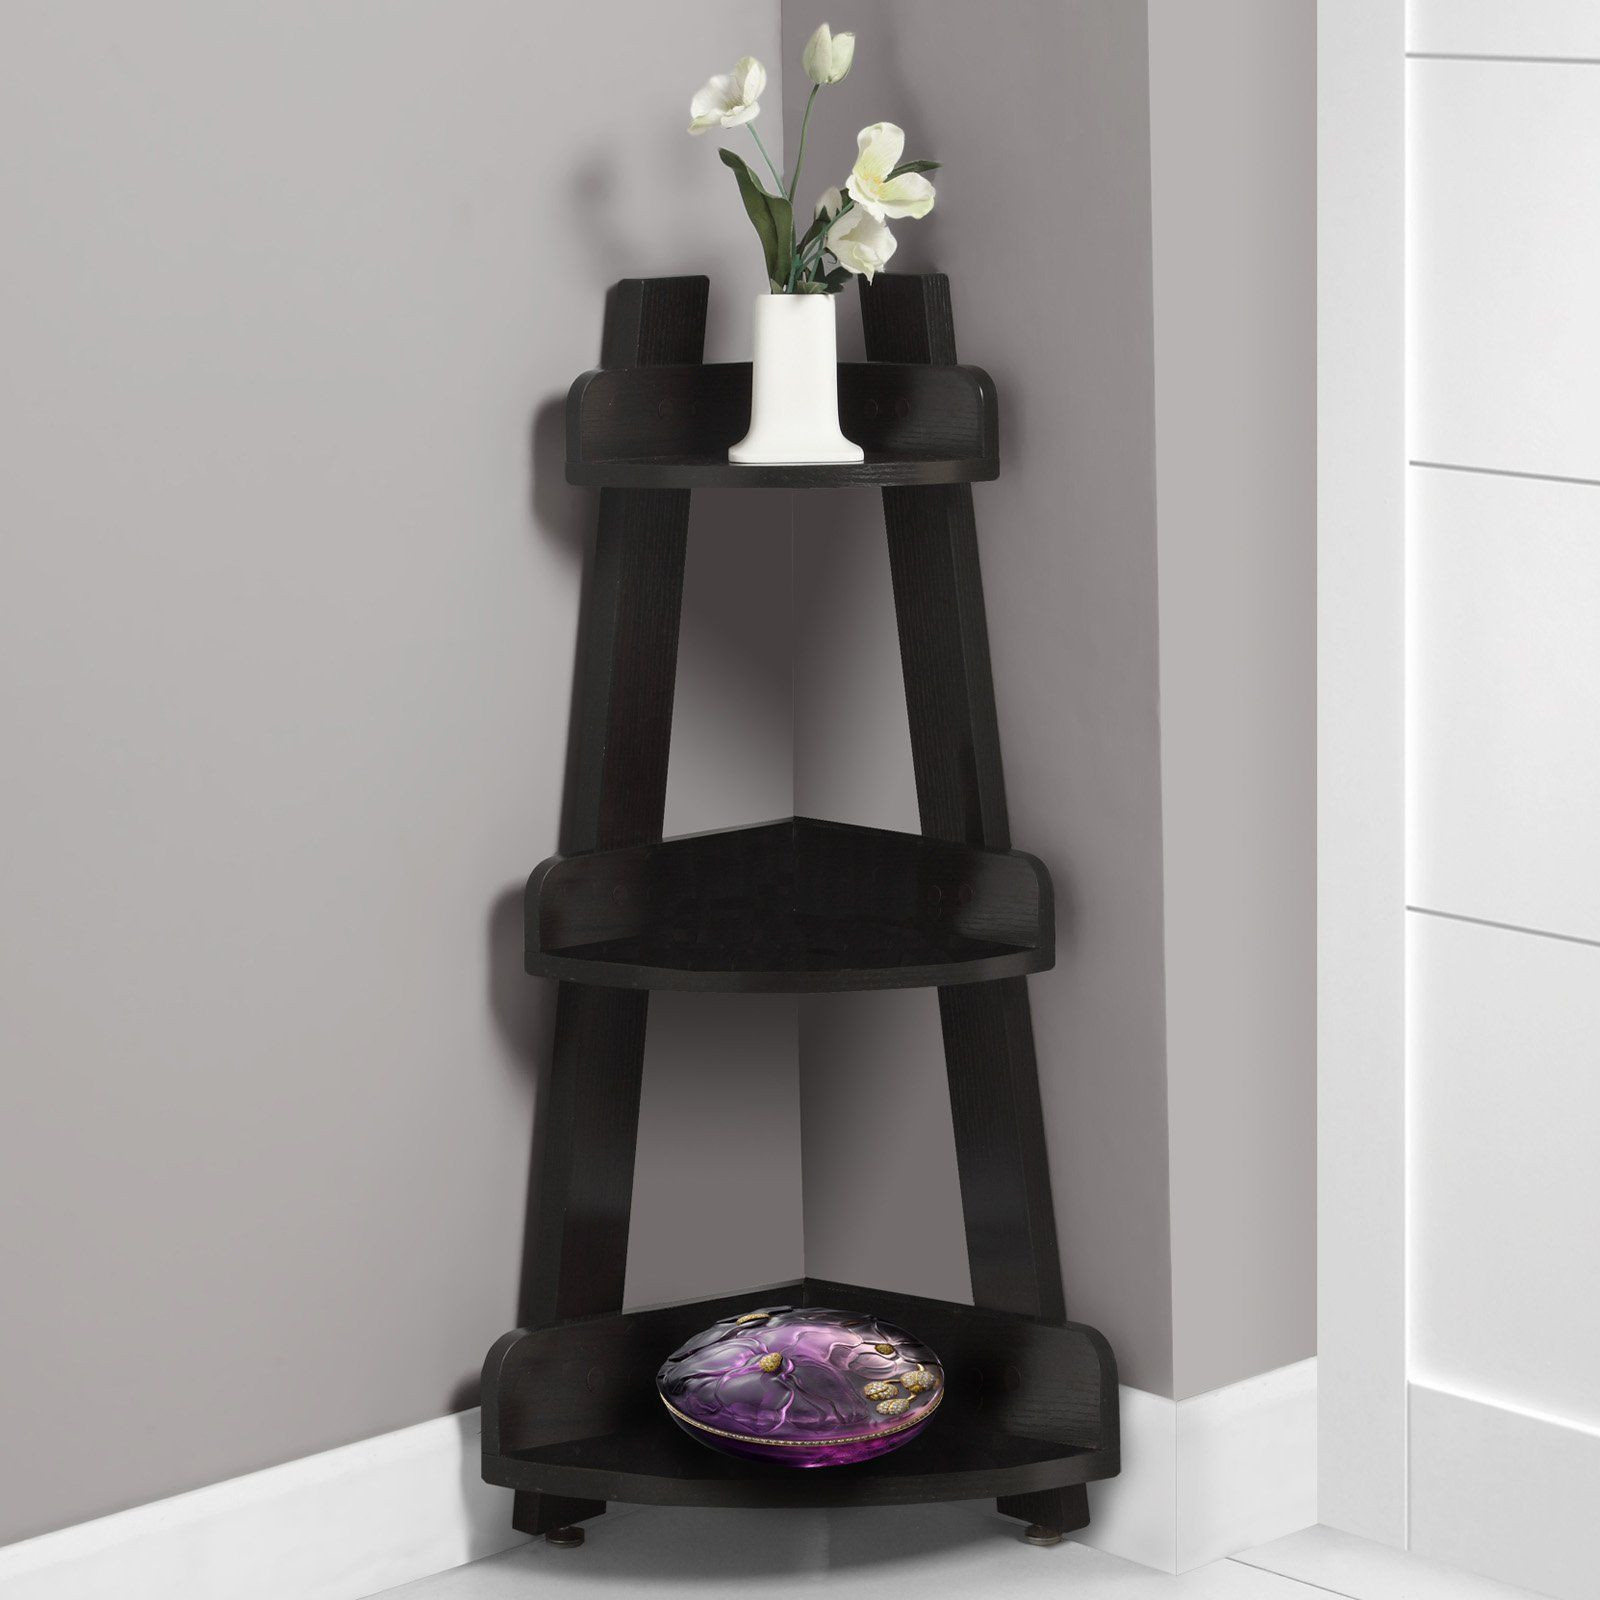 Small Corner Table For Bathroom
 Monarch Specialties Wood 3 Tier Corner Shelf